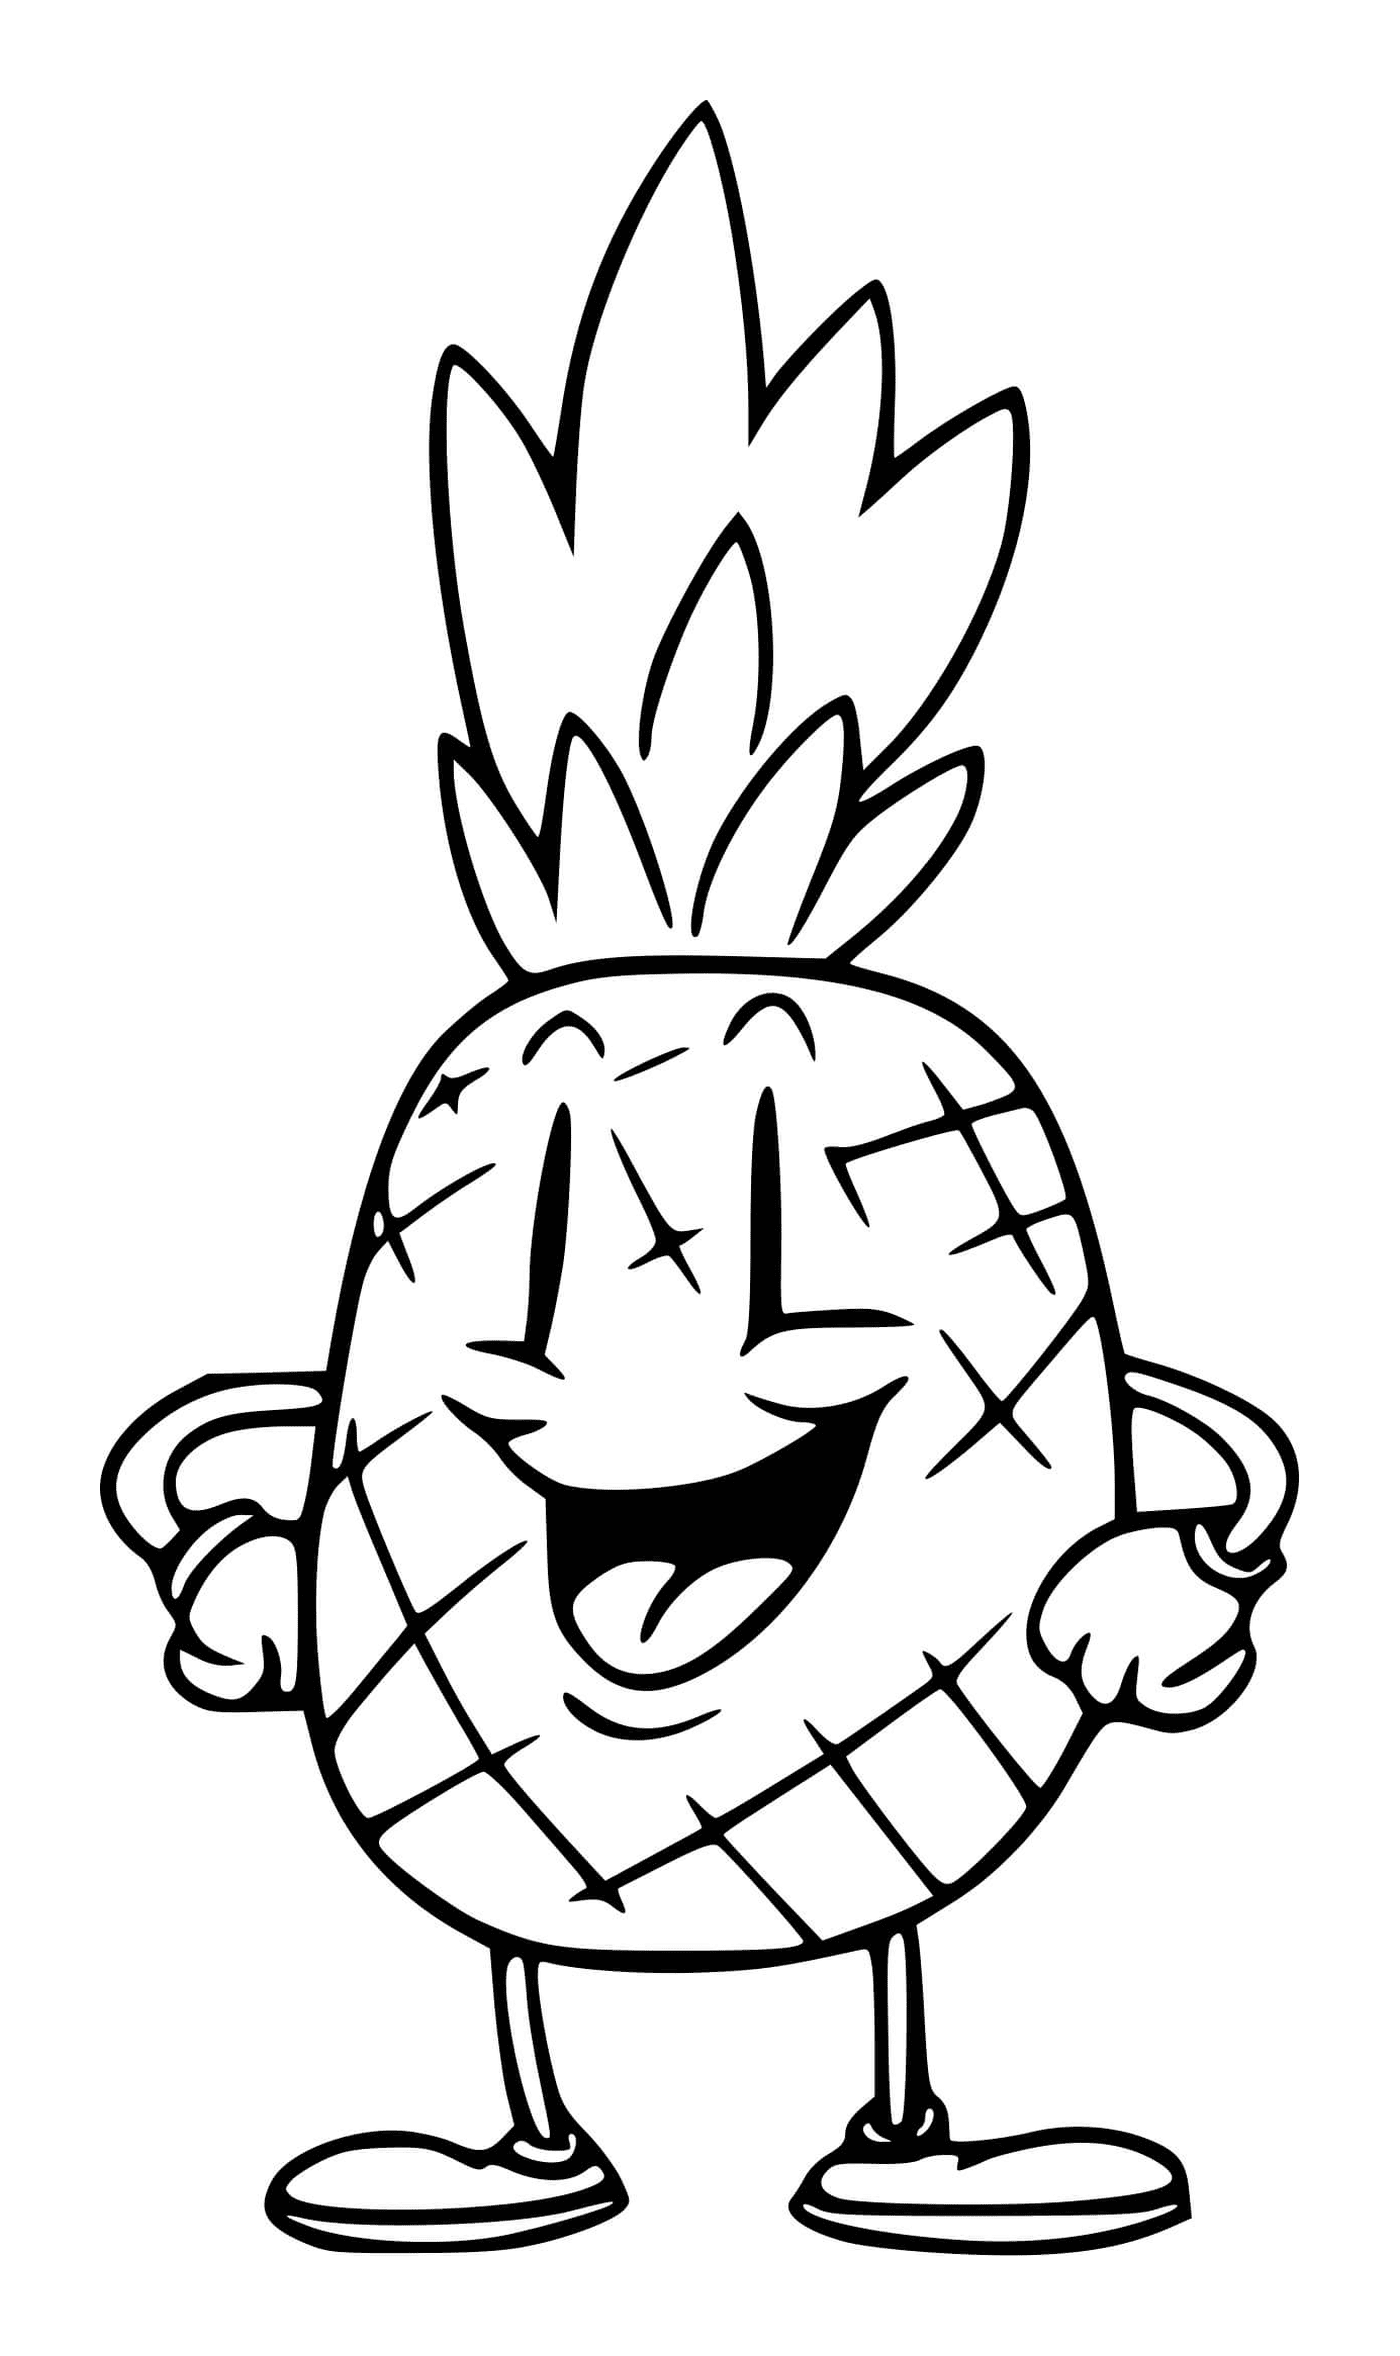  A pineapple for preschool children 